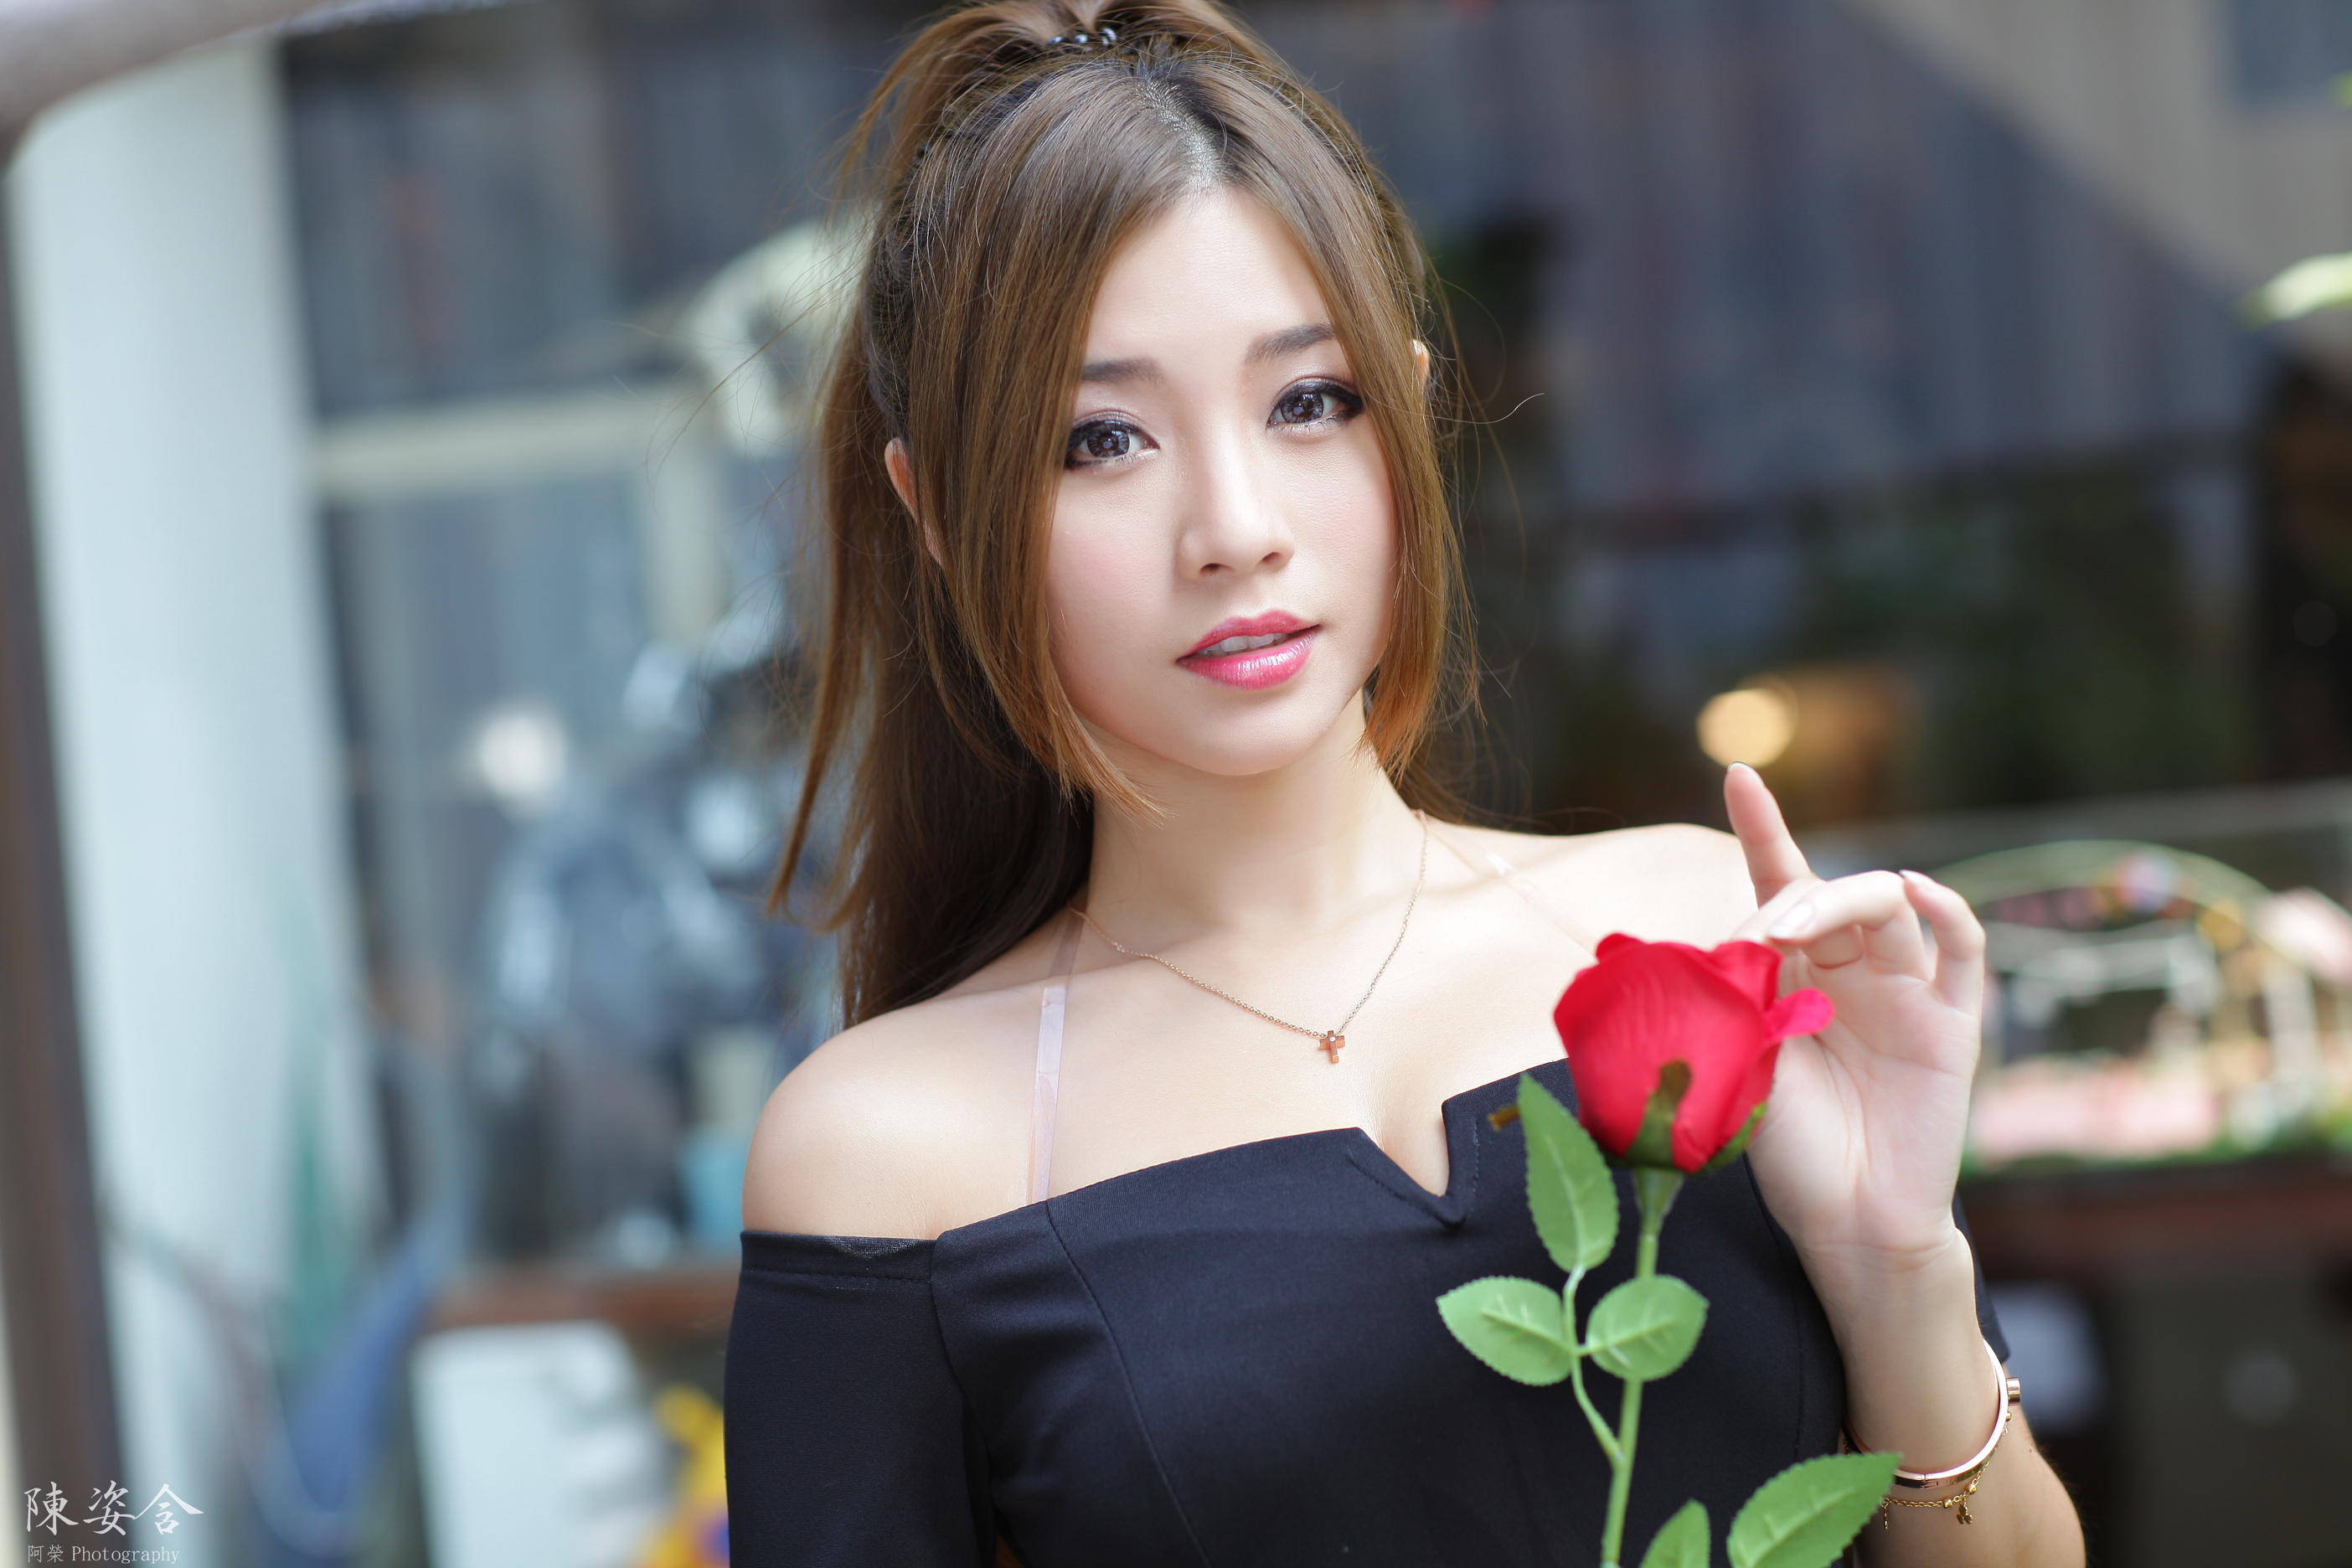 Asian Model Women Long Hair Brunette Depth Of Field Ponytail Rose Necklace Bare Shoulders Black Top 2808x1872